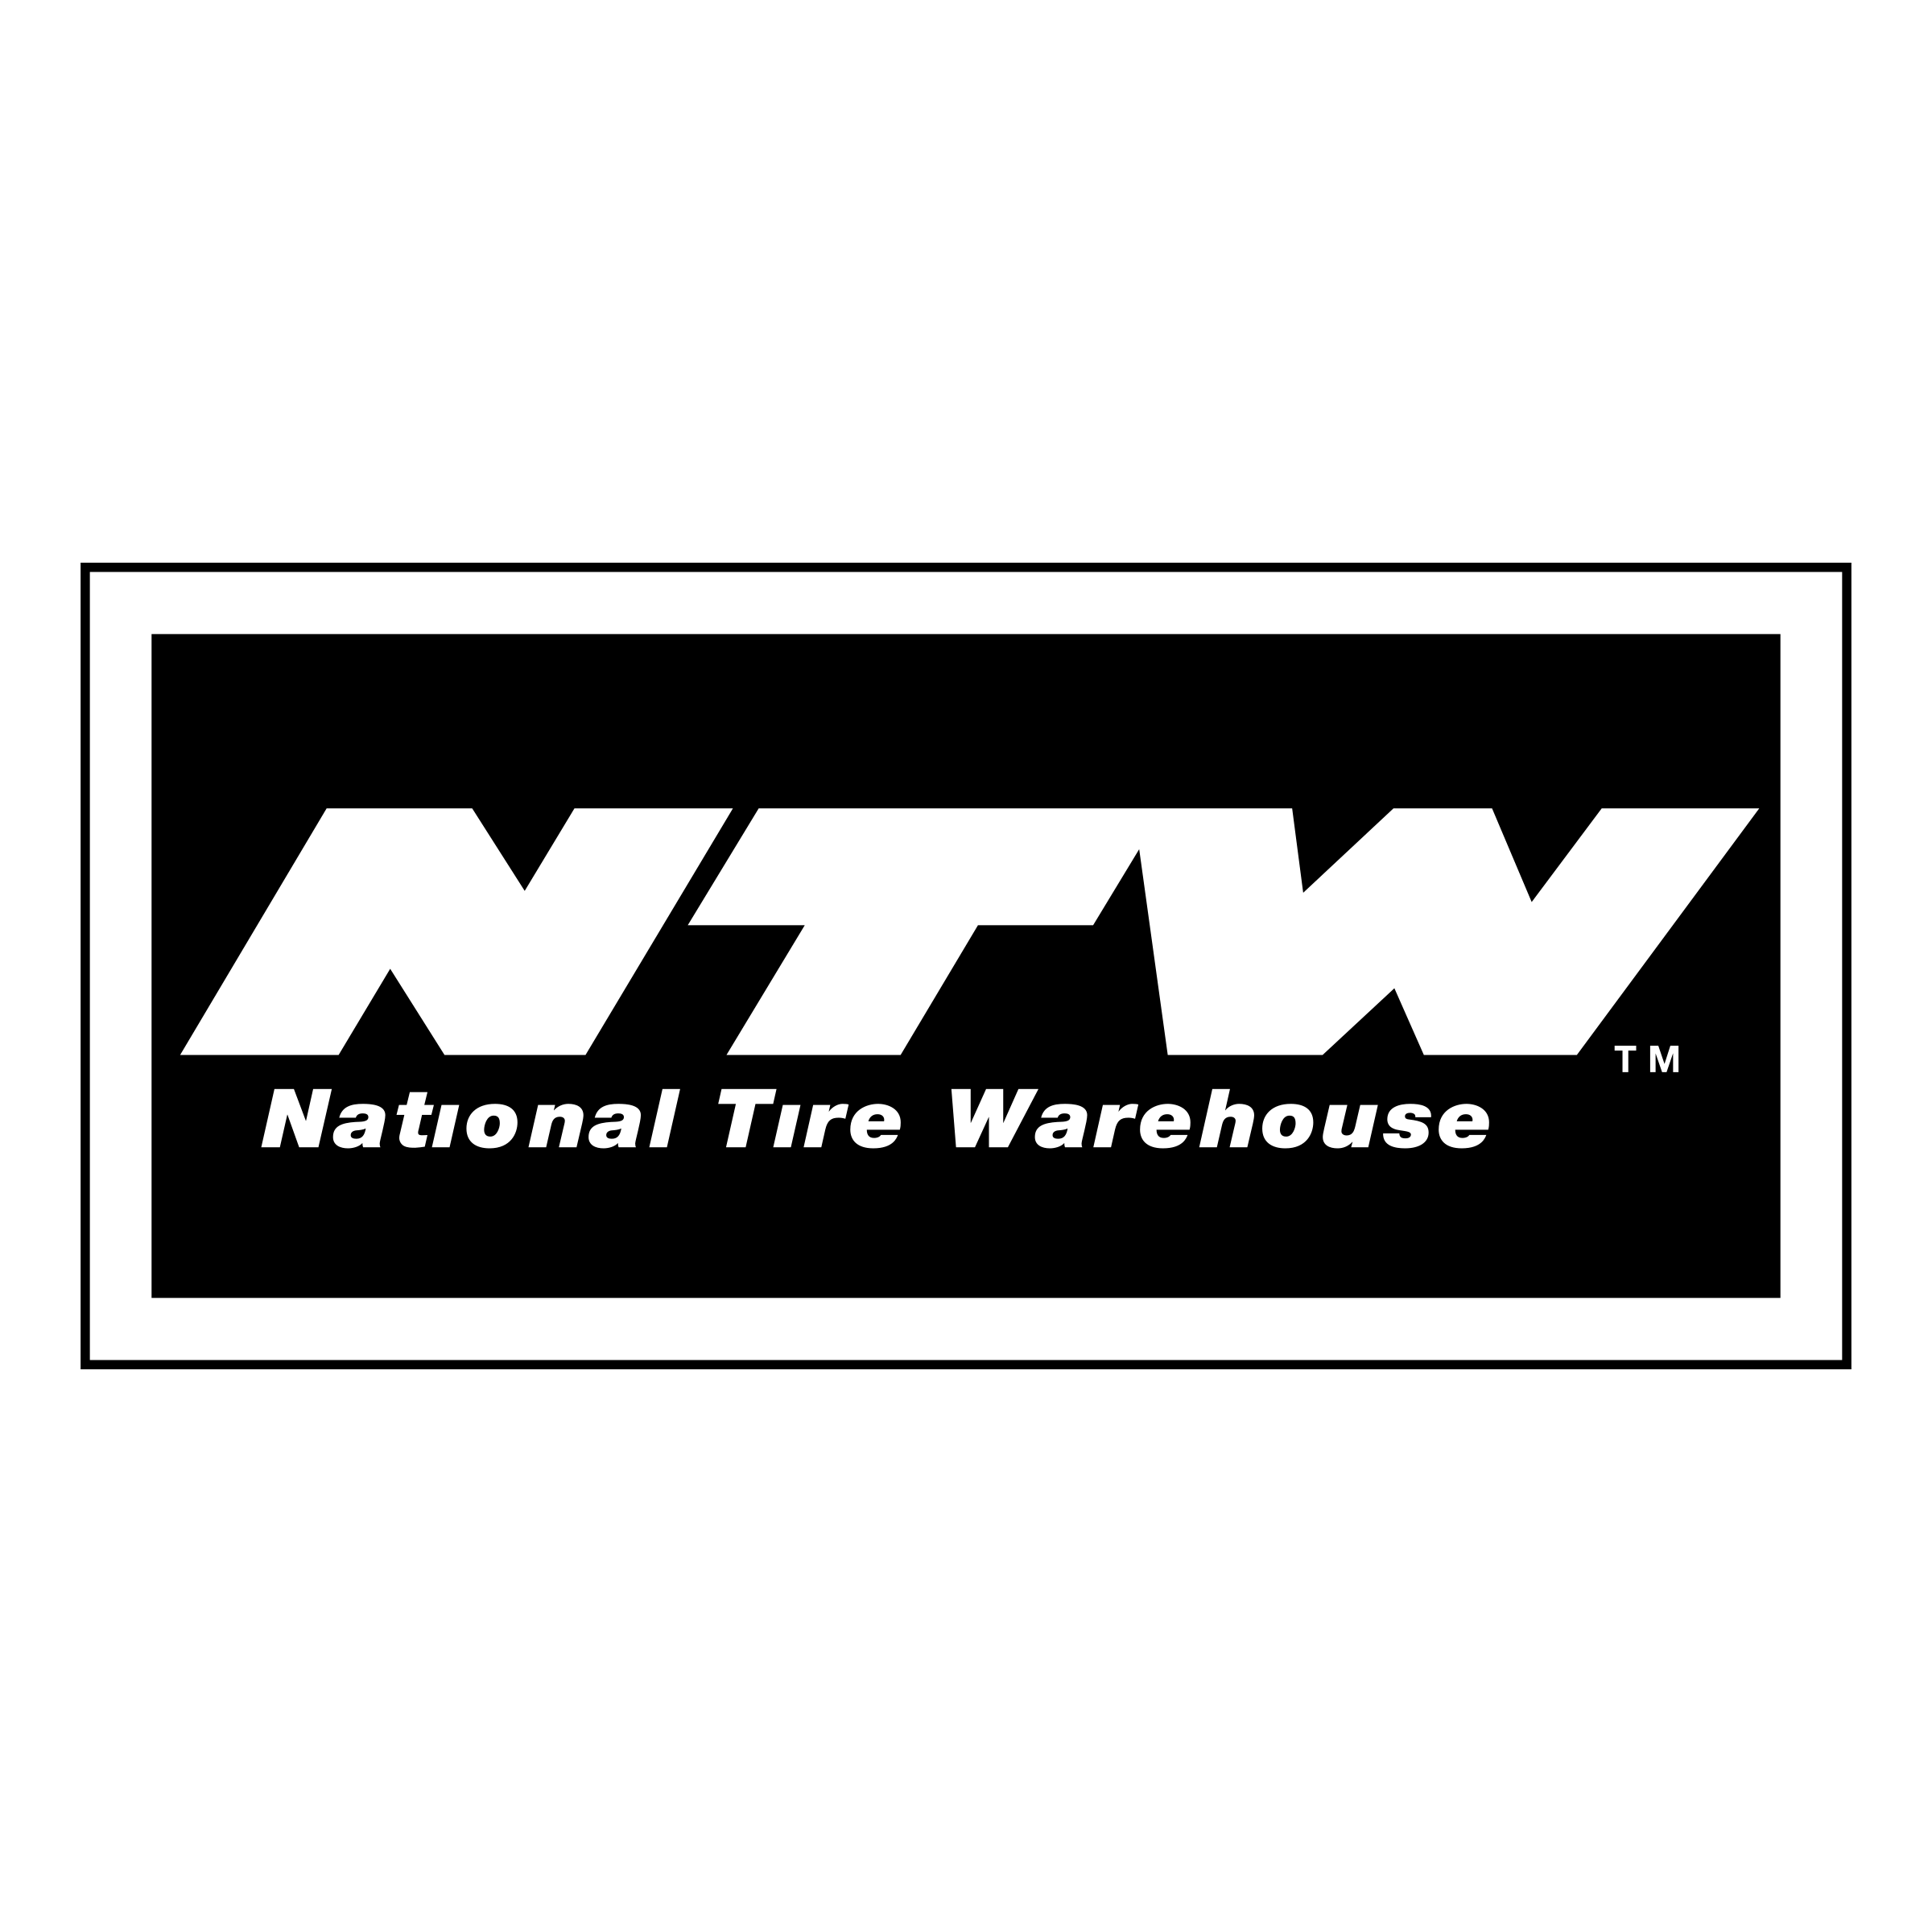 NTW Logo - NTW Logo PNG Transparent & SVG Vector - Freebie Supply